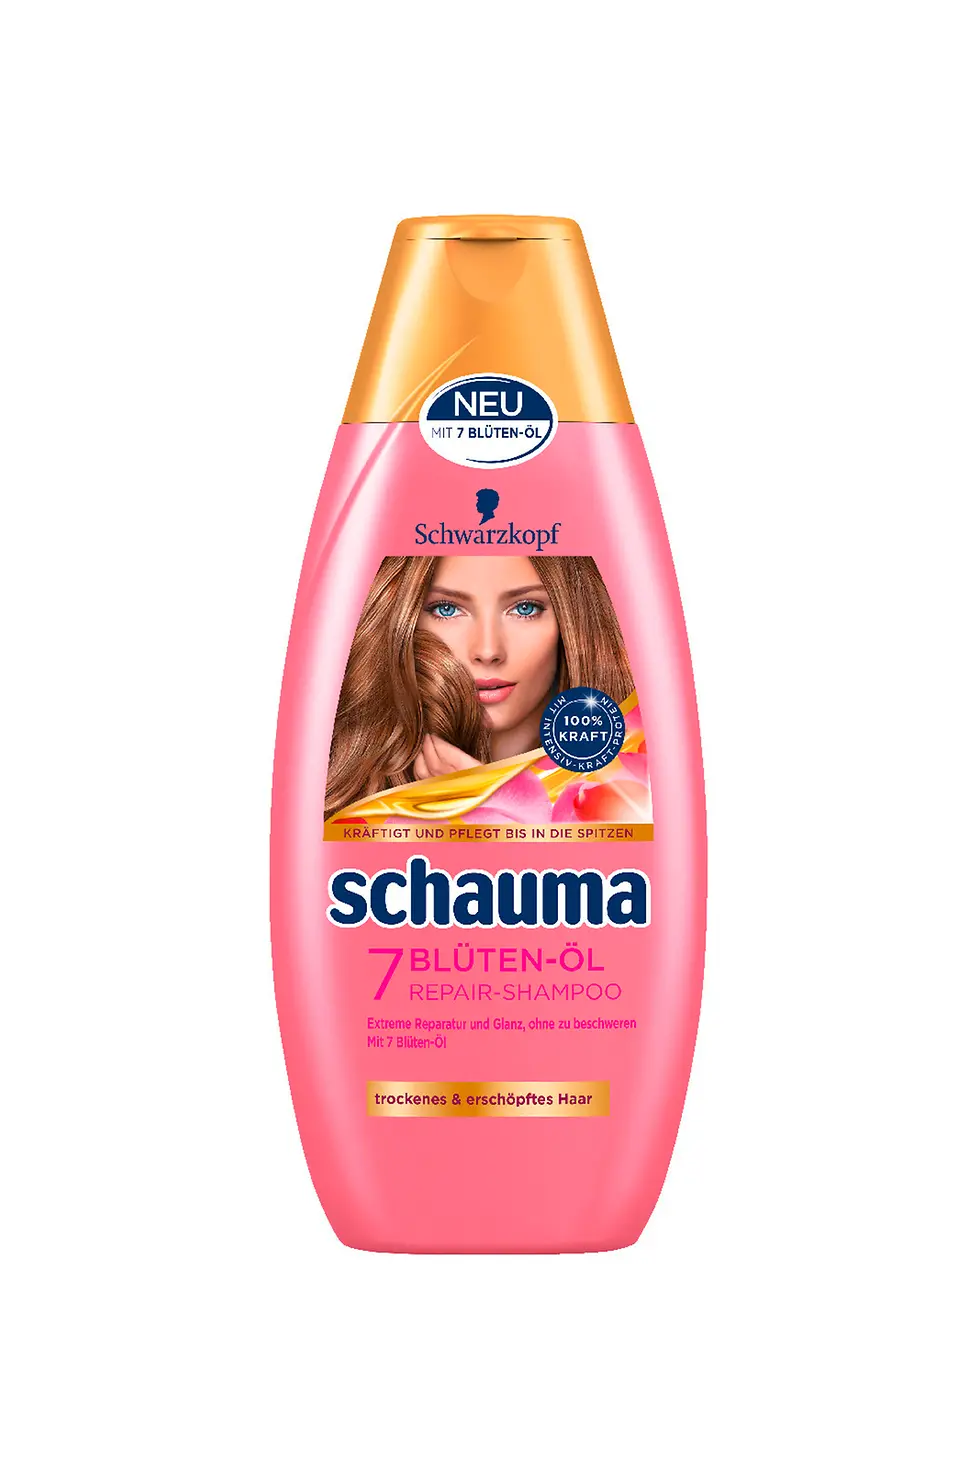 schauma-shampoo-7-blueten-oel-jpg